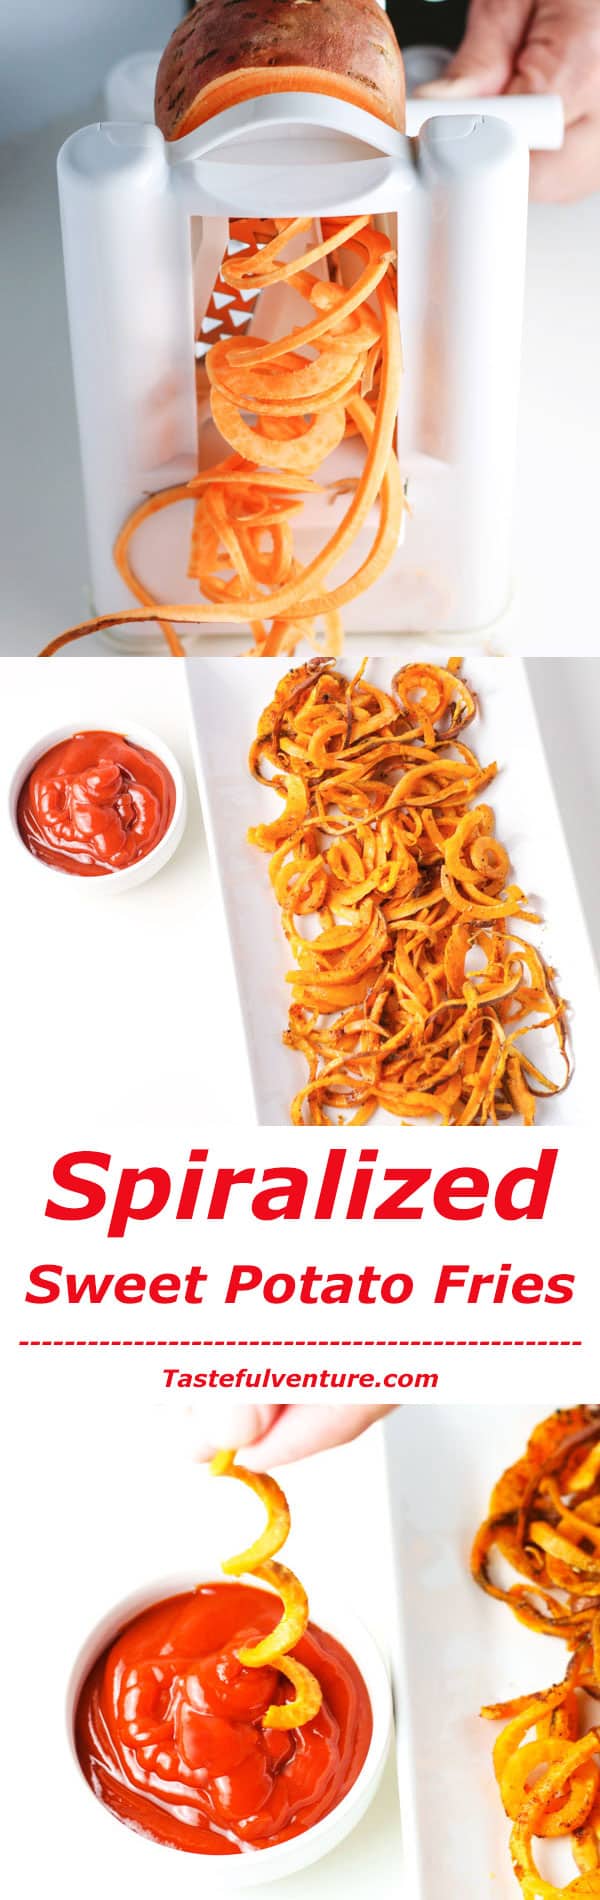 Spiralized Sweet Potato Fries